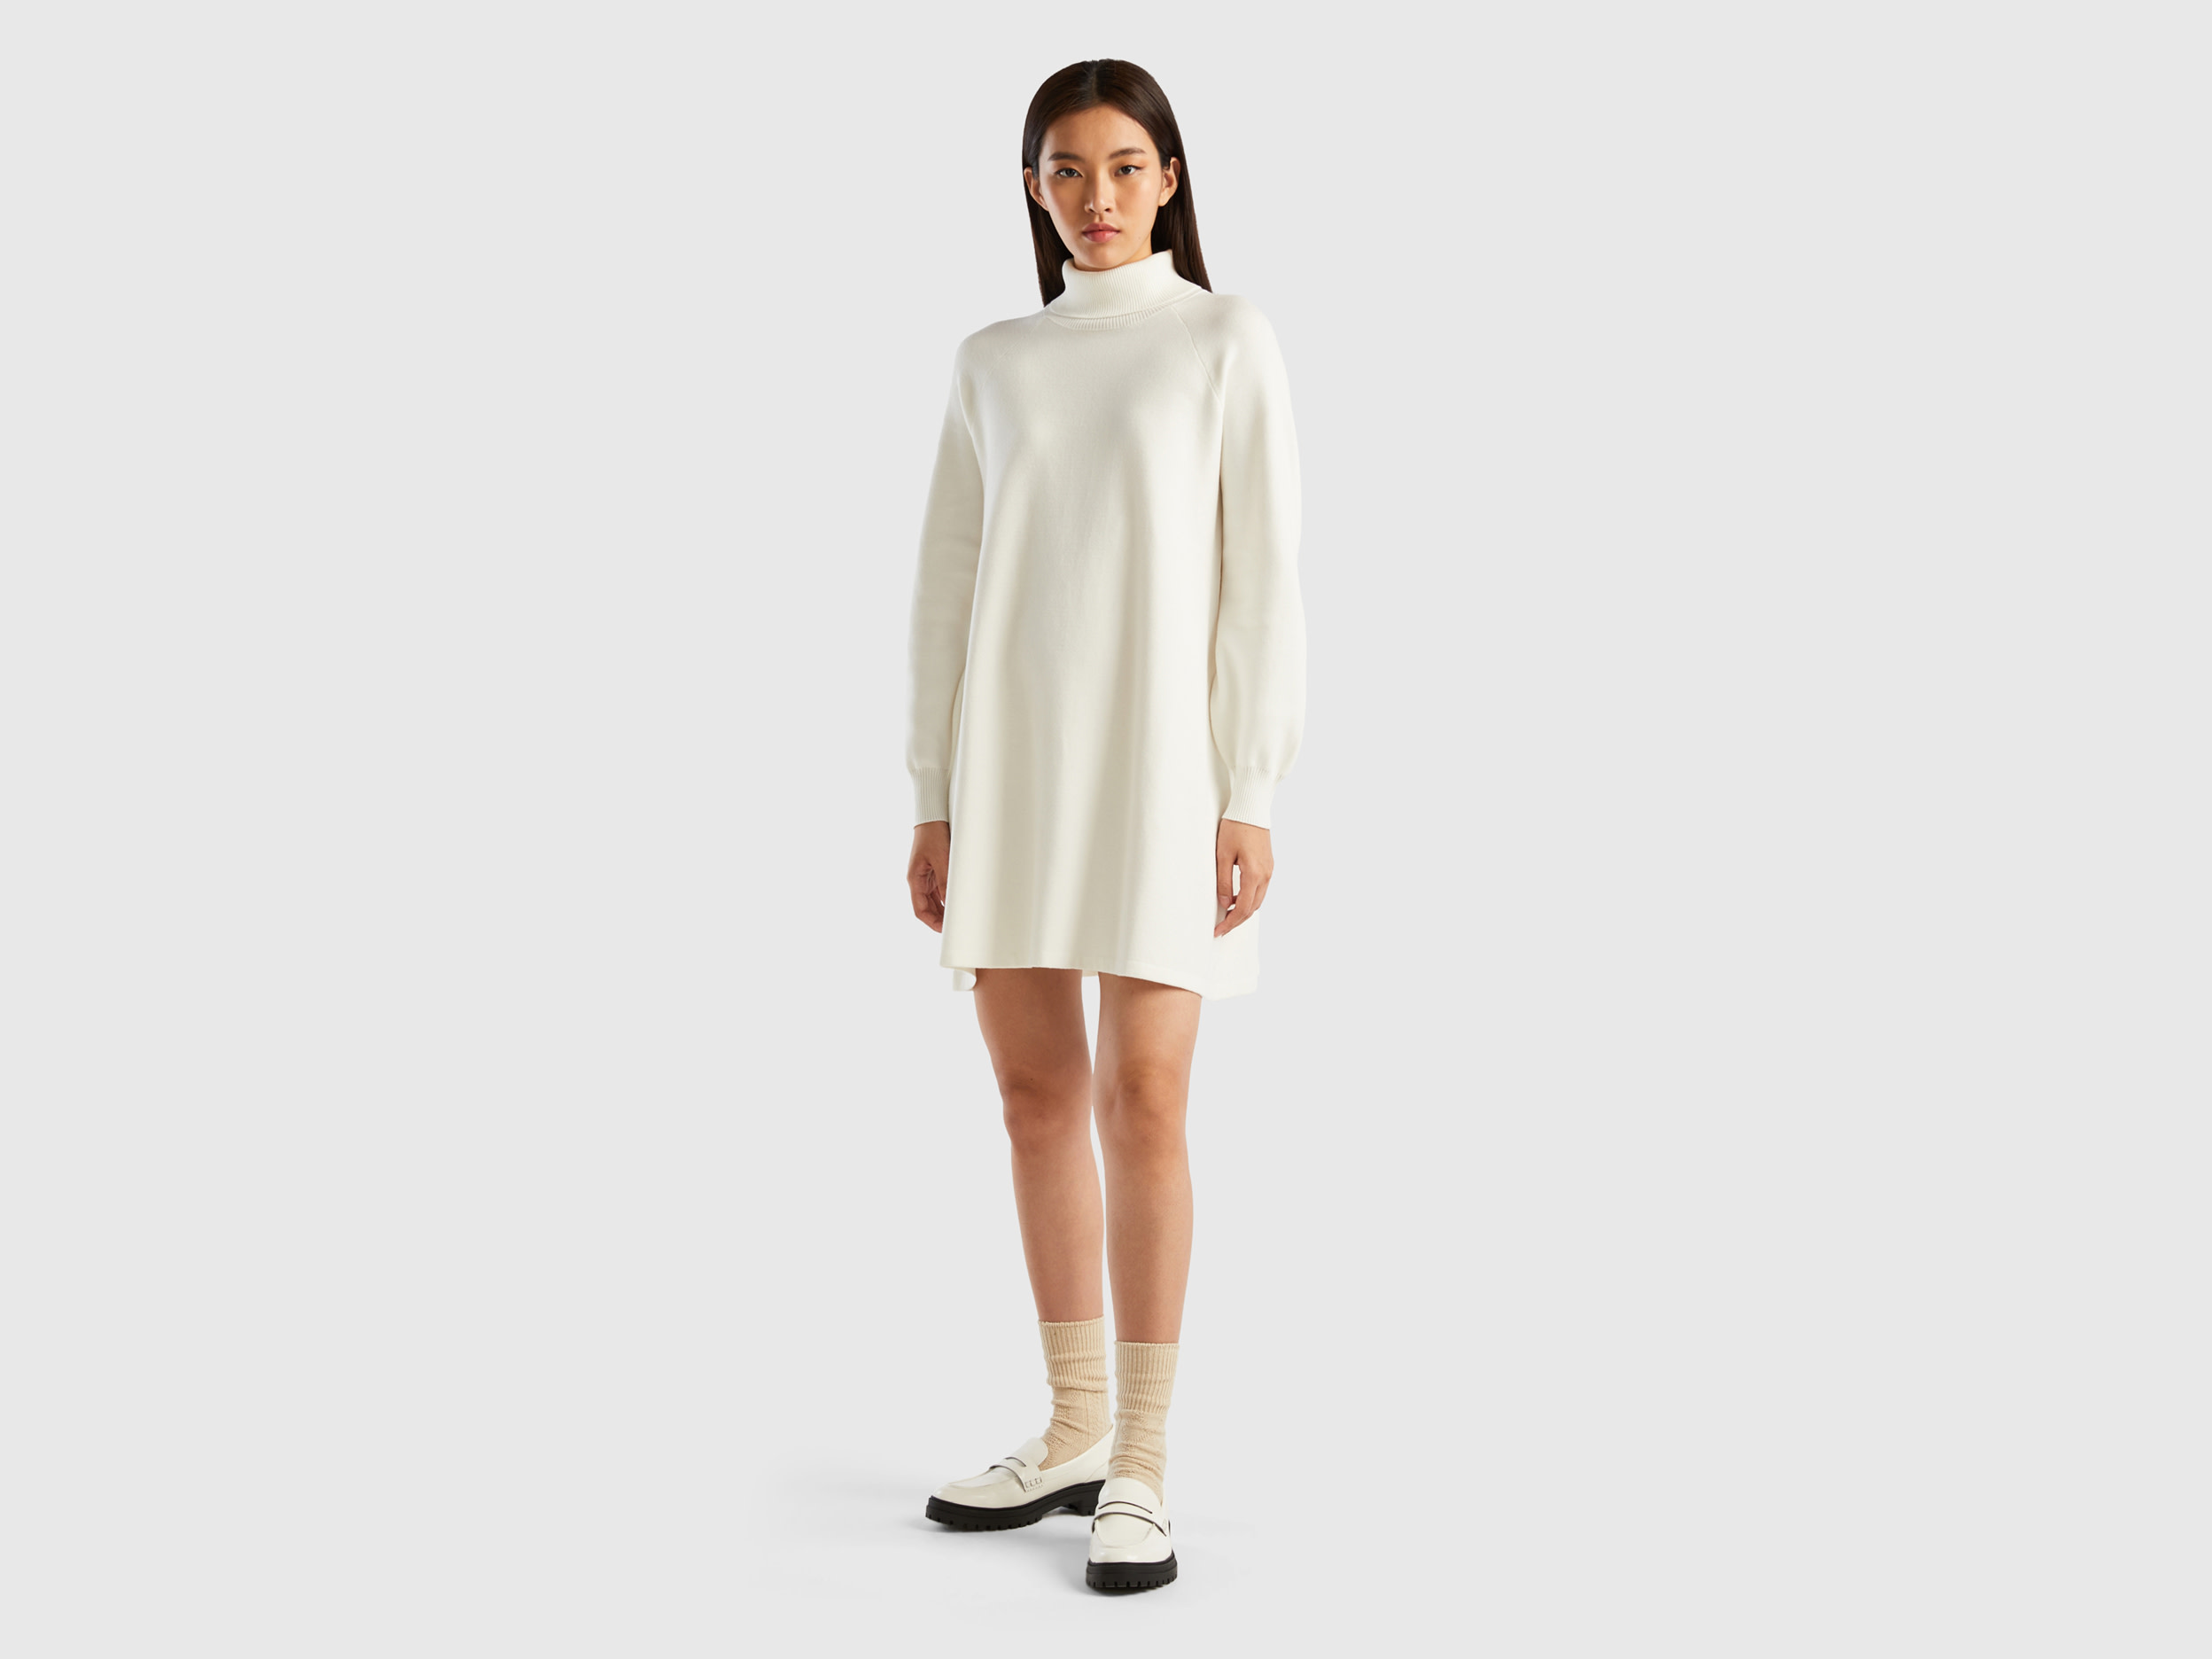 Benetton, Knit Dress With High Neck, size L-XL, Creamy White, Women